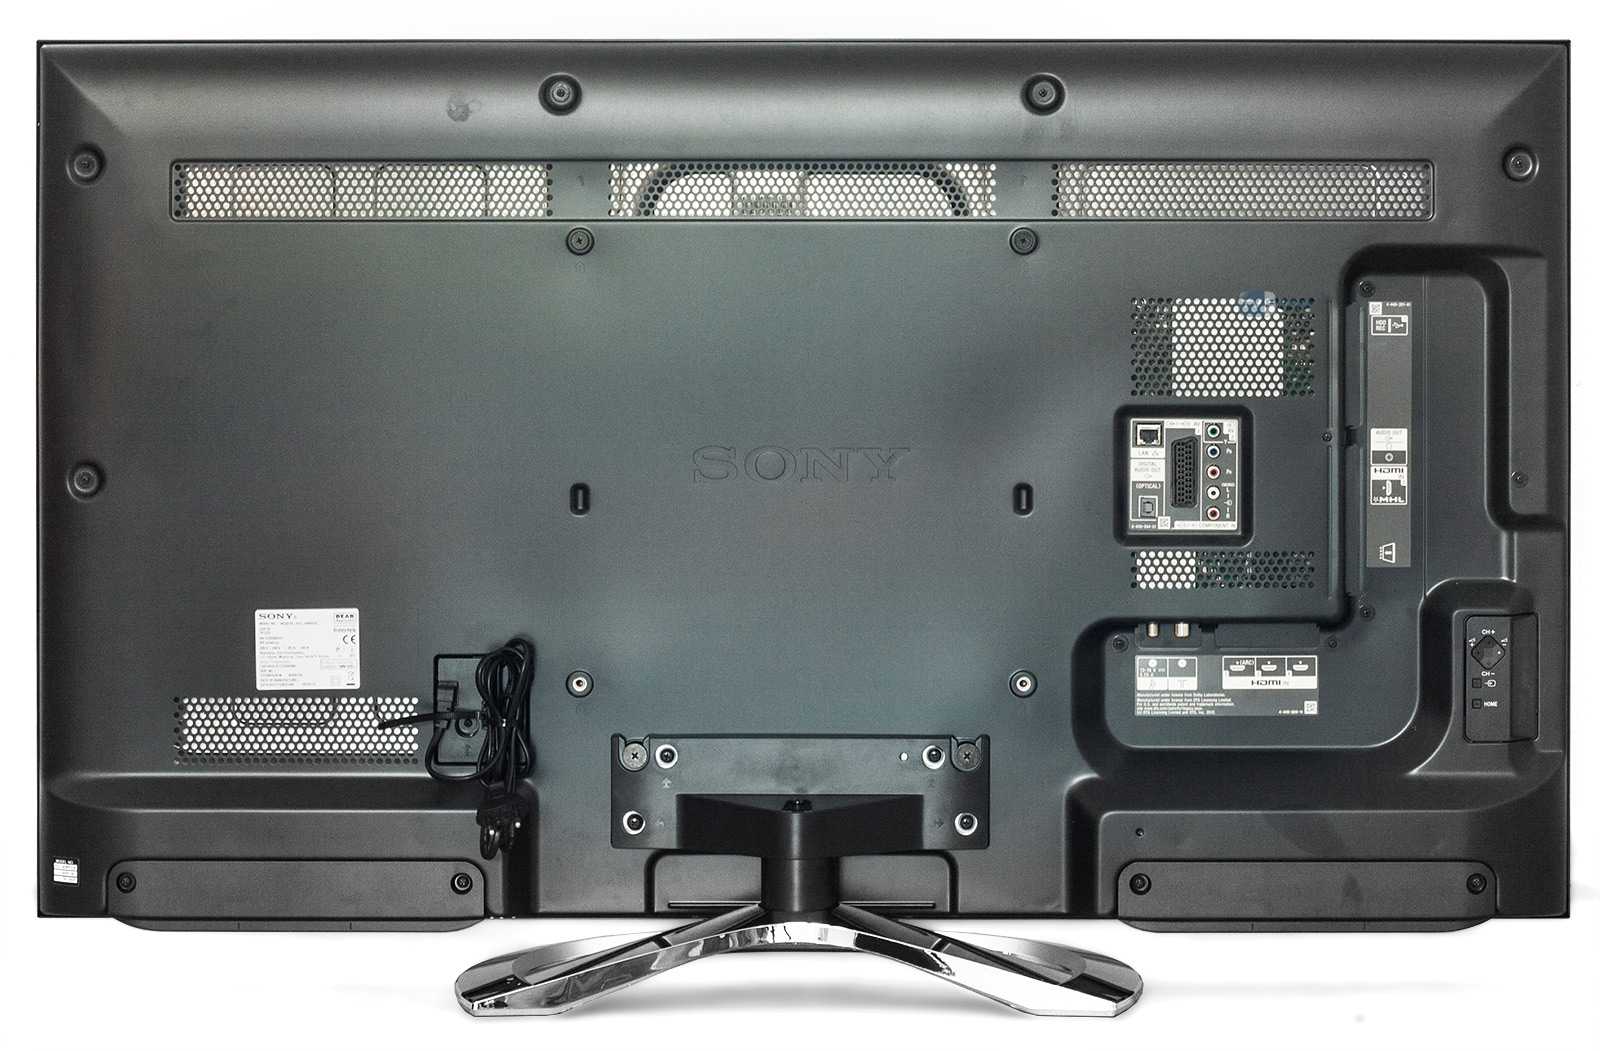 Sony kdl-26bx320 - купить , скидки, цена, отзывы, обзор, характеристики - телевизоры